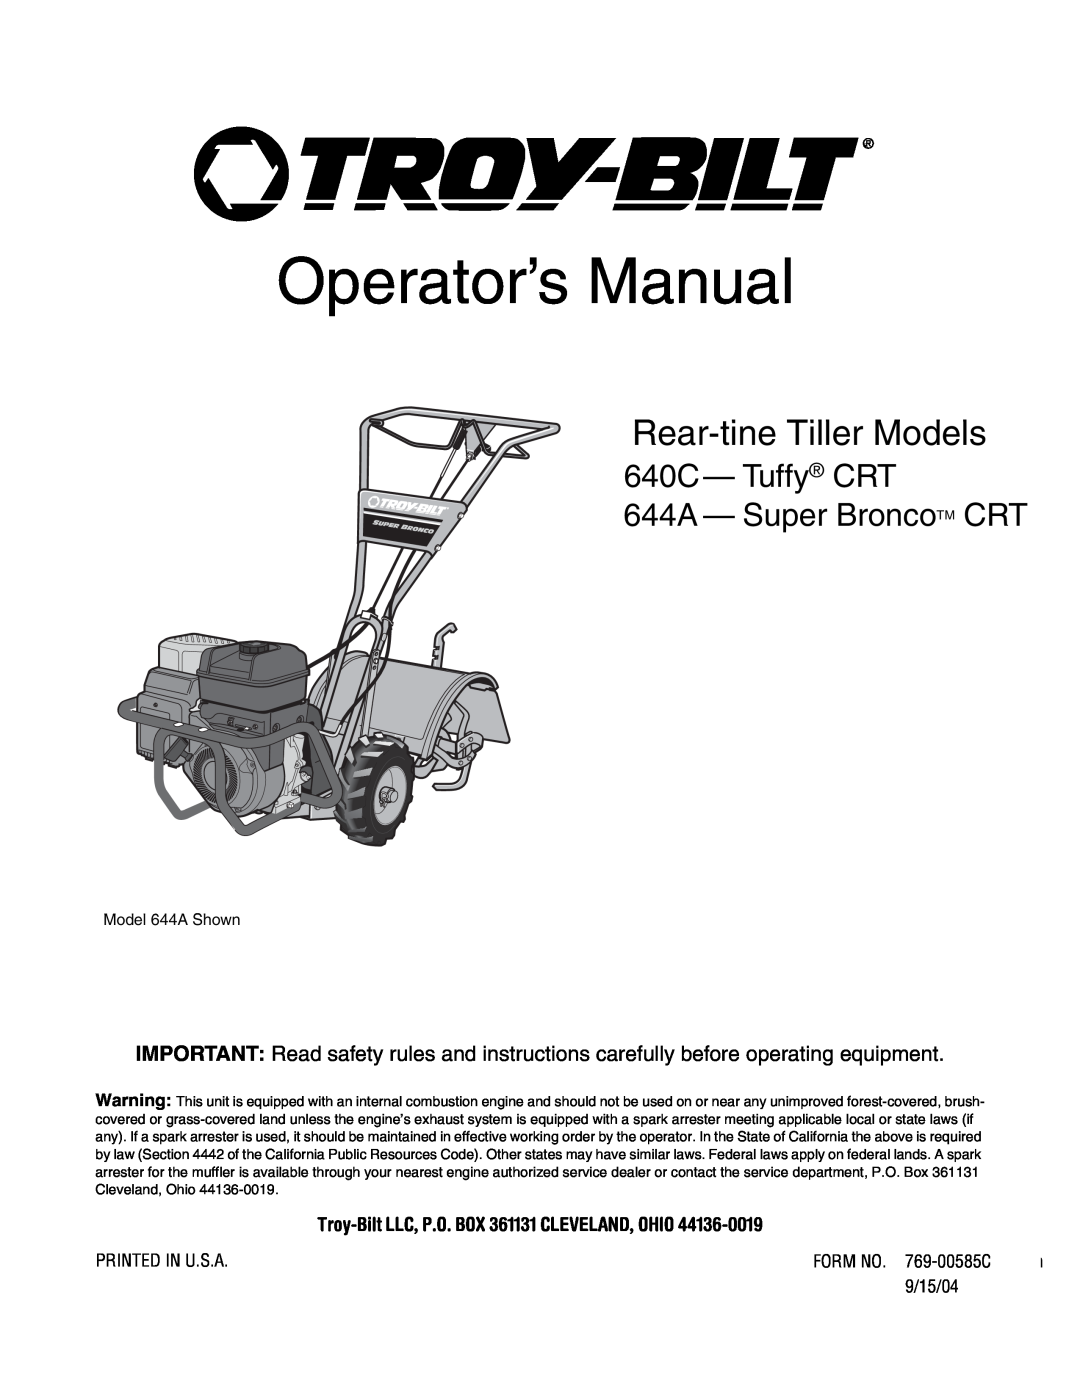 Troy-Bilt 640C-Tuffy CRT manual Operator’s Manual, Rear-tine Tiller Models, 640C - Tuffy CRT 644A - Super BroncoTM CRT 